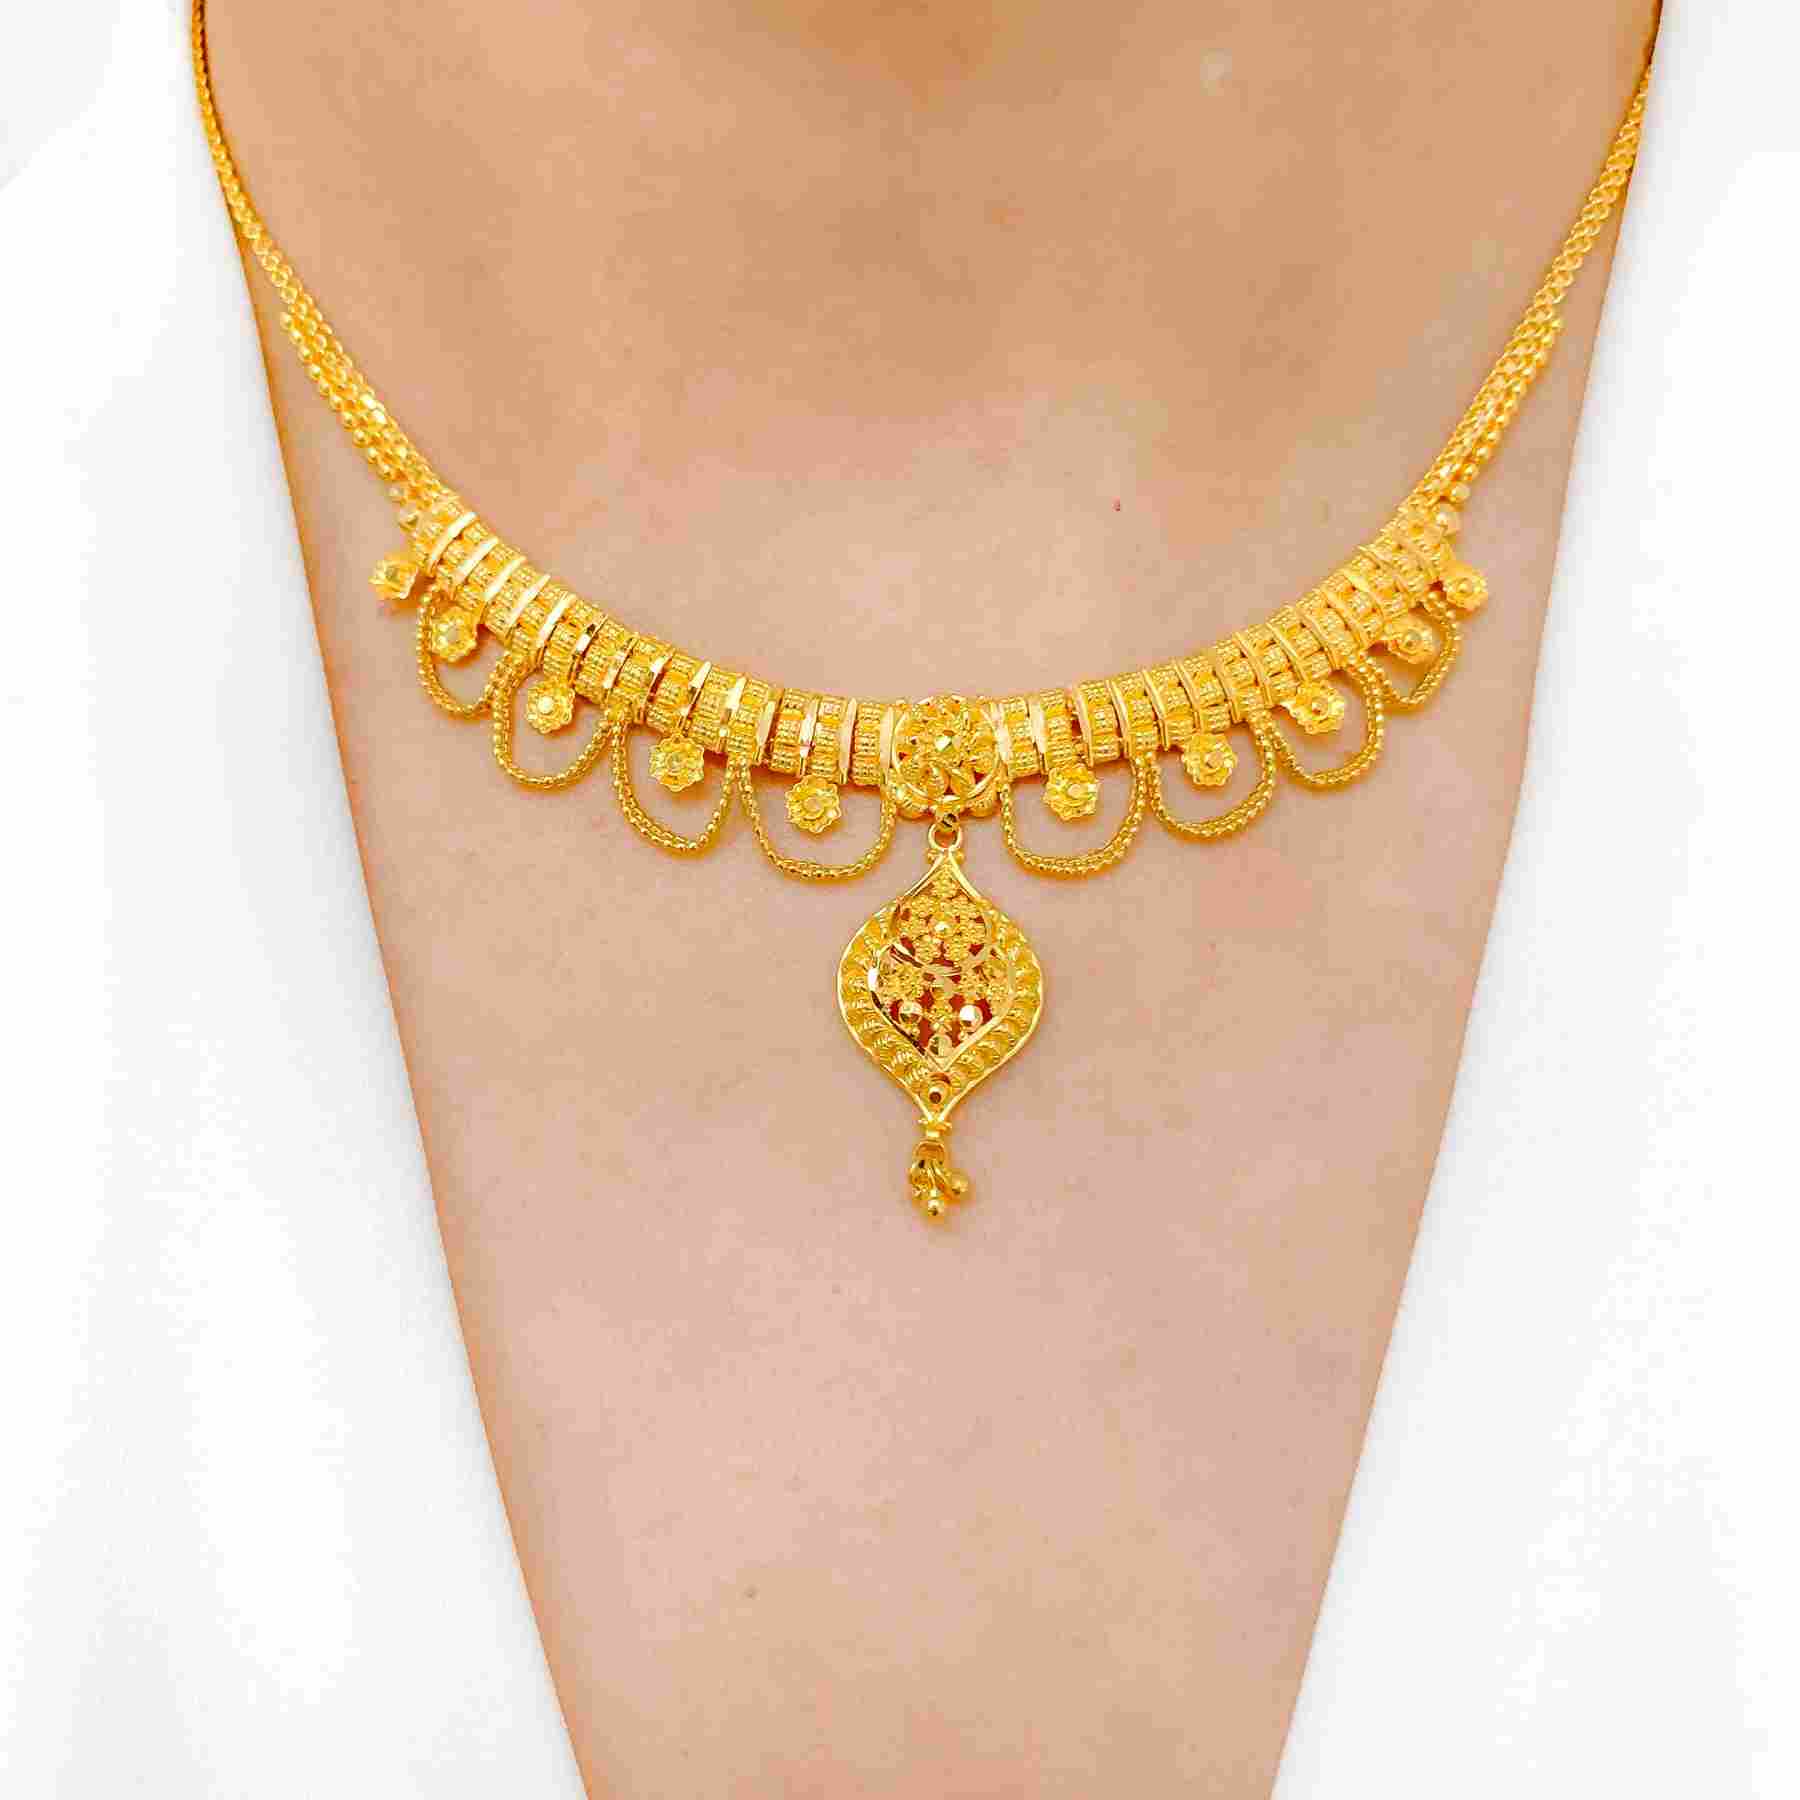 Wedding Gold Necklace Design : हलके वजन में नेकलेस